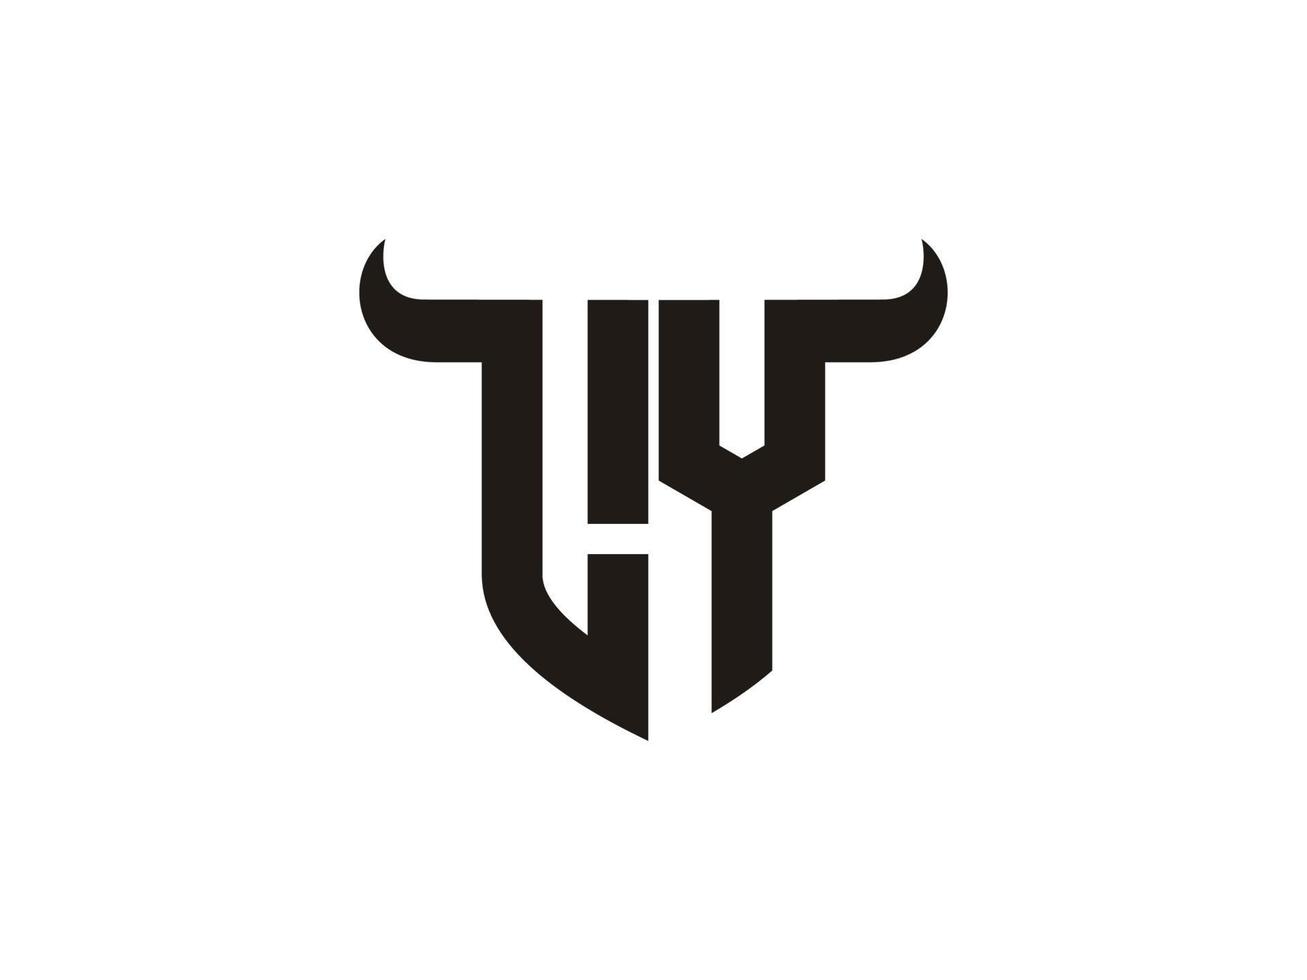 inicialmente design de logotipo de touro. vetor